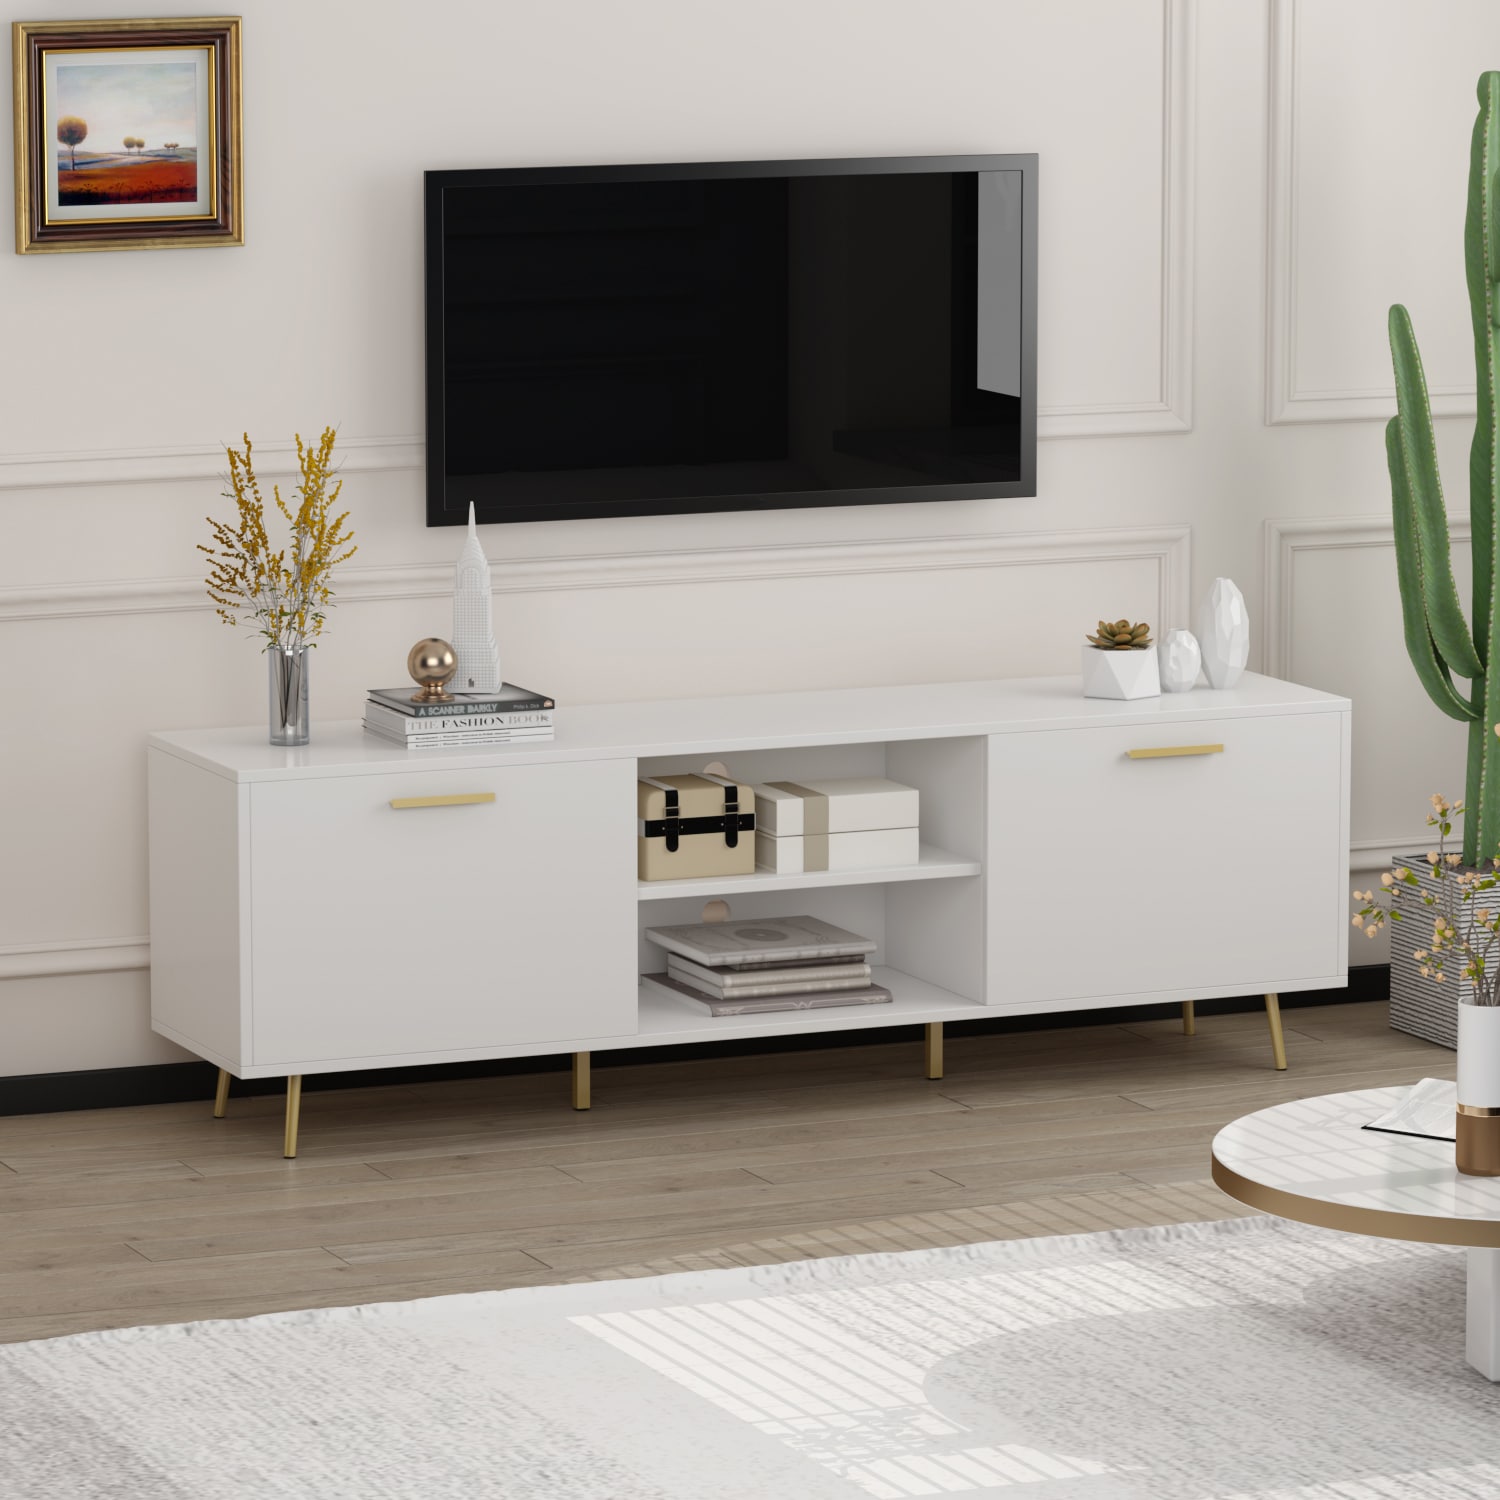 TV stand media cabinet removable shelf storage cabinet for living room